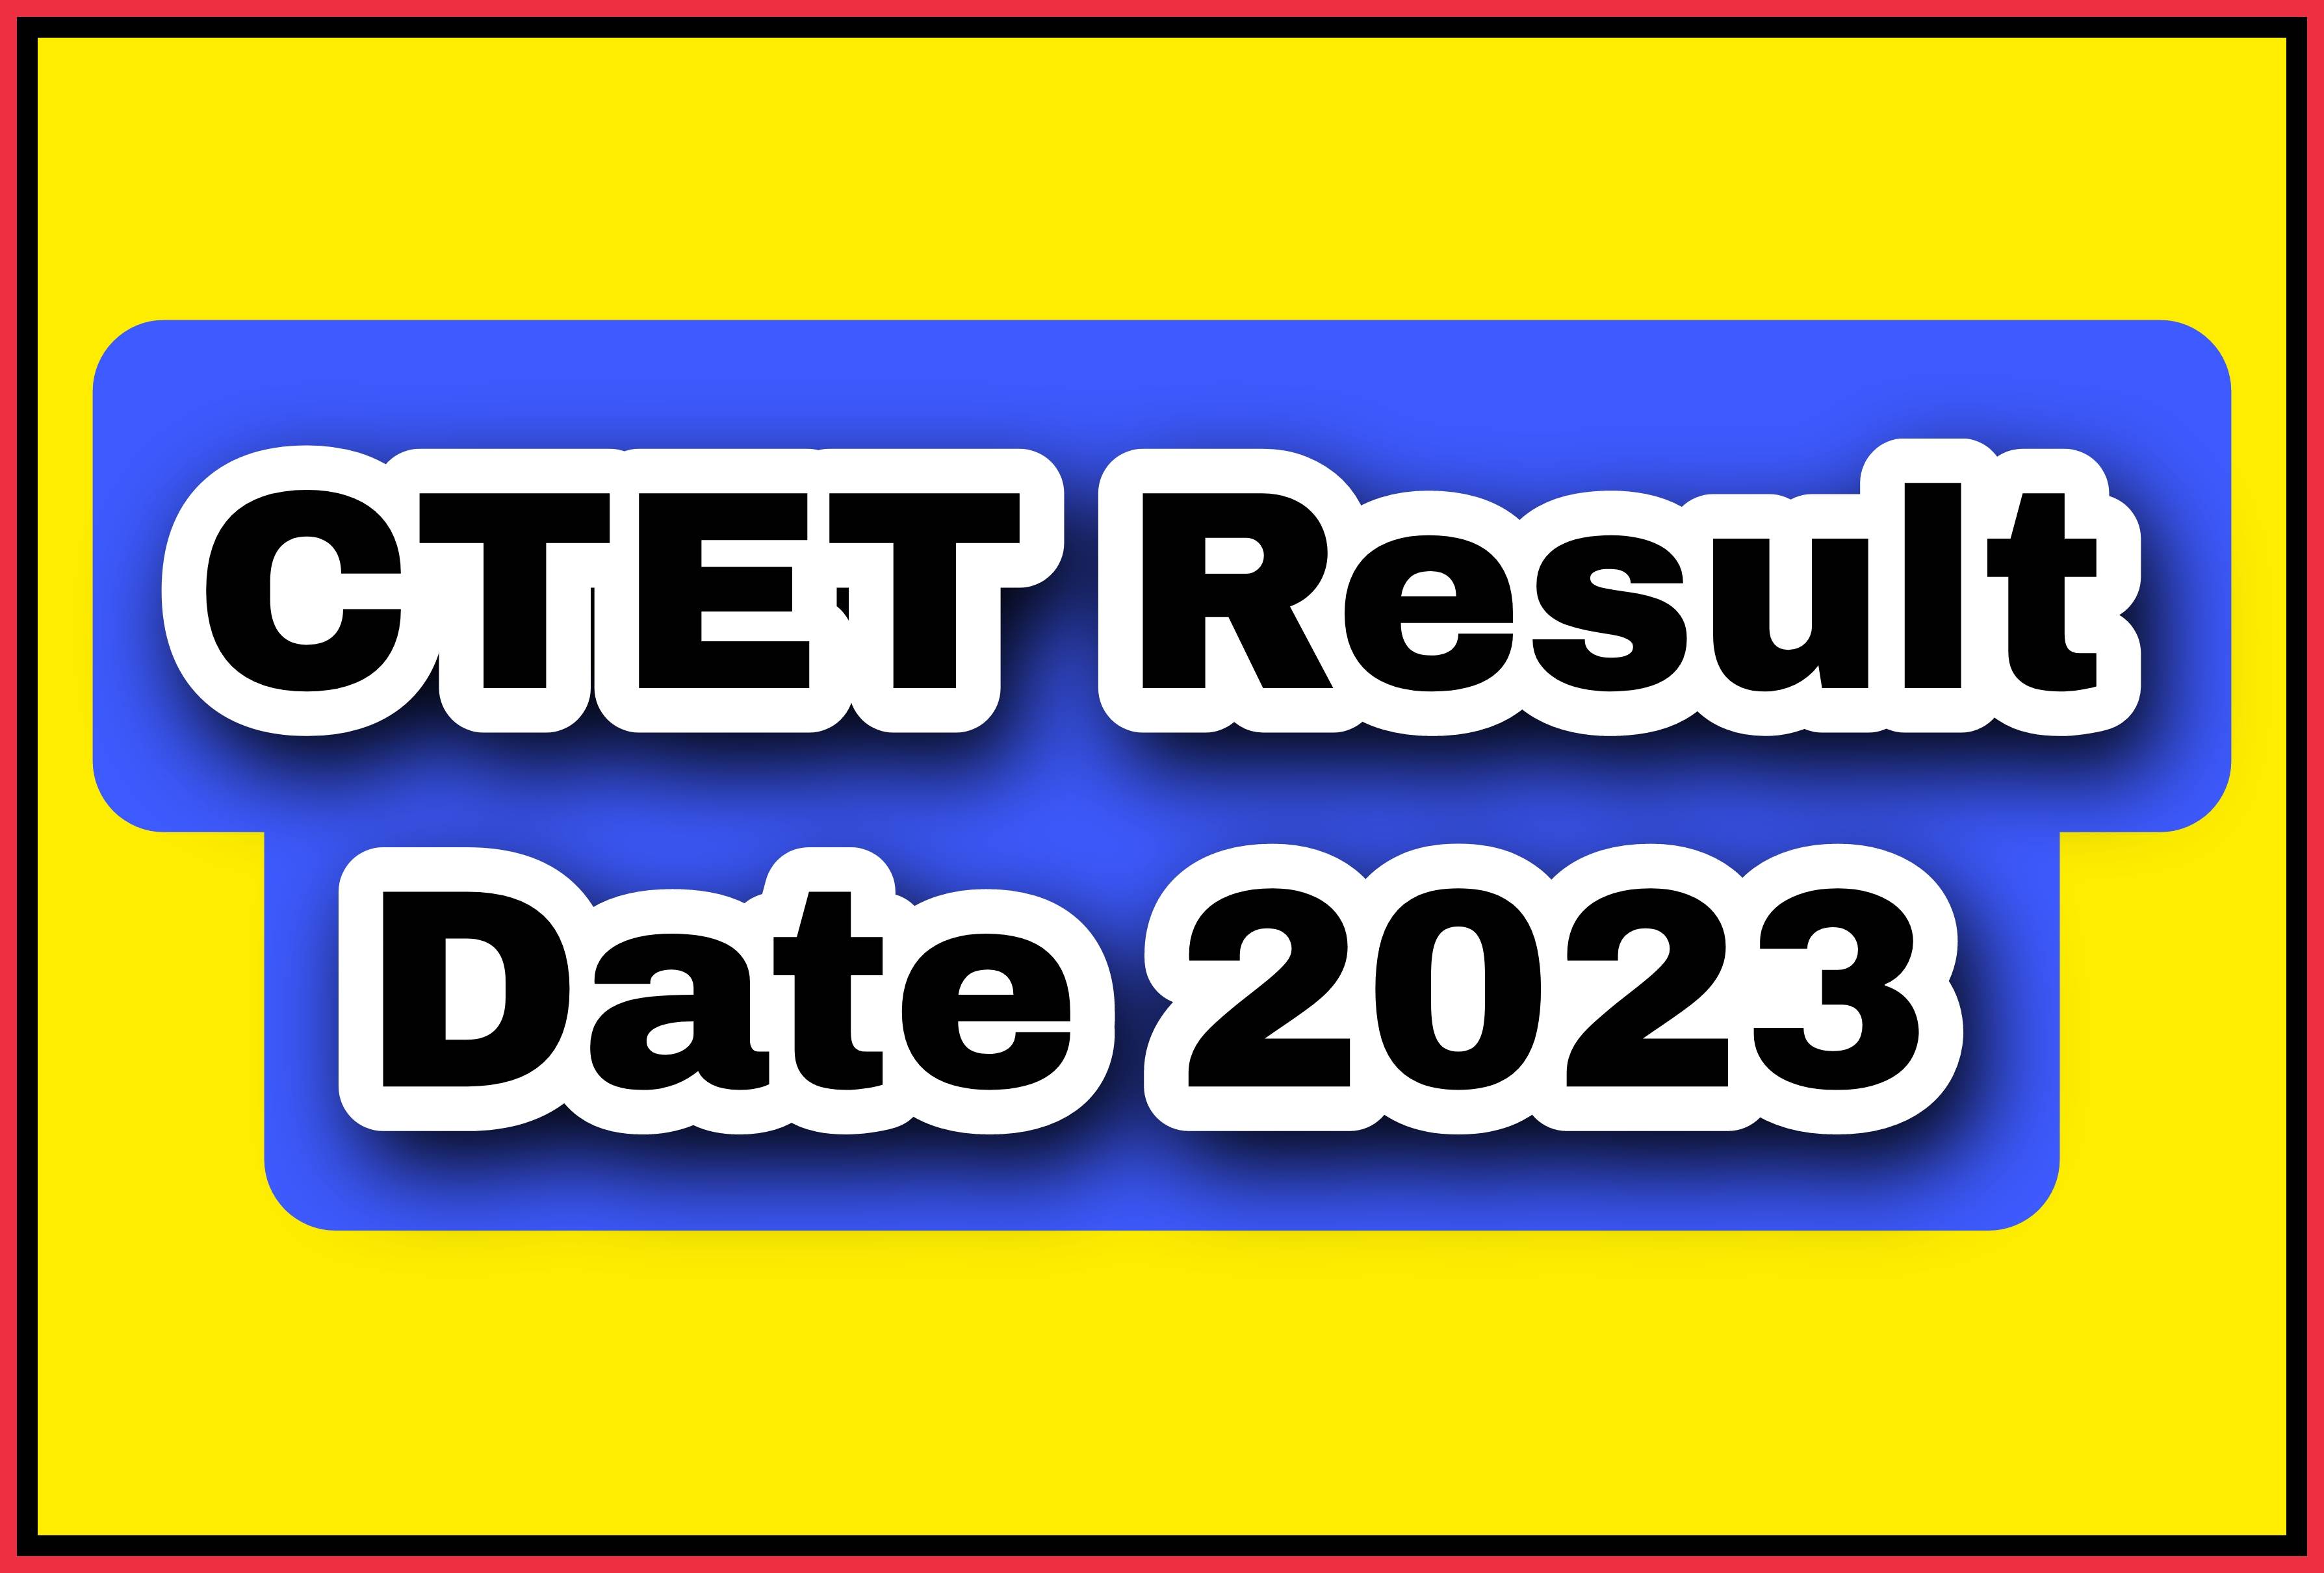 CTET Result Date 2023